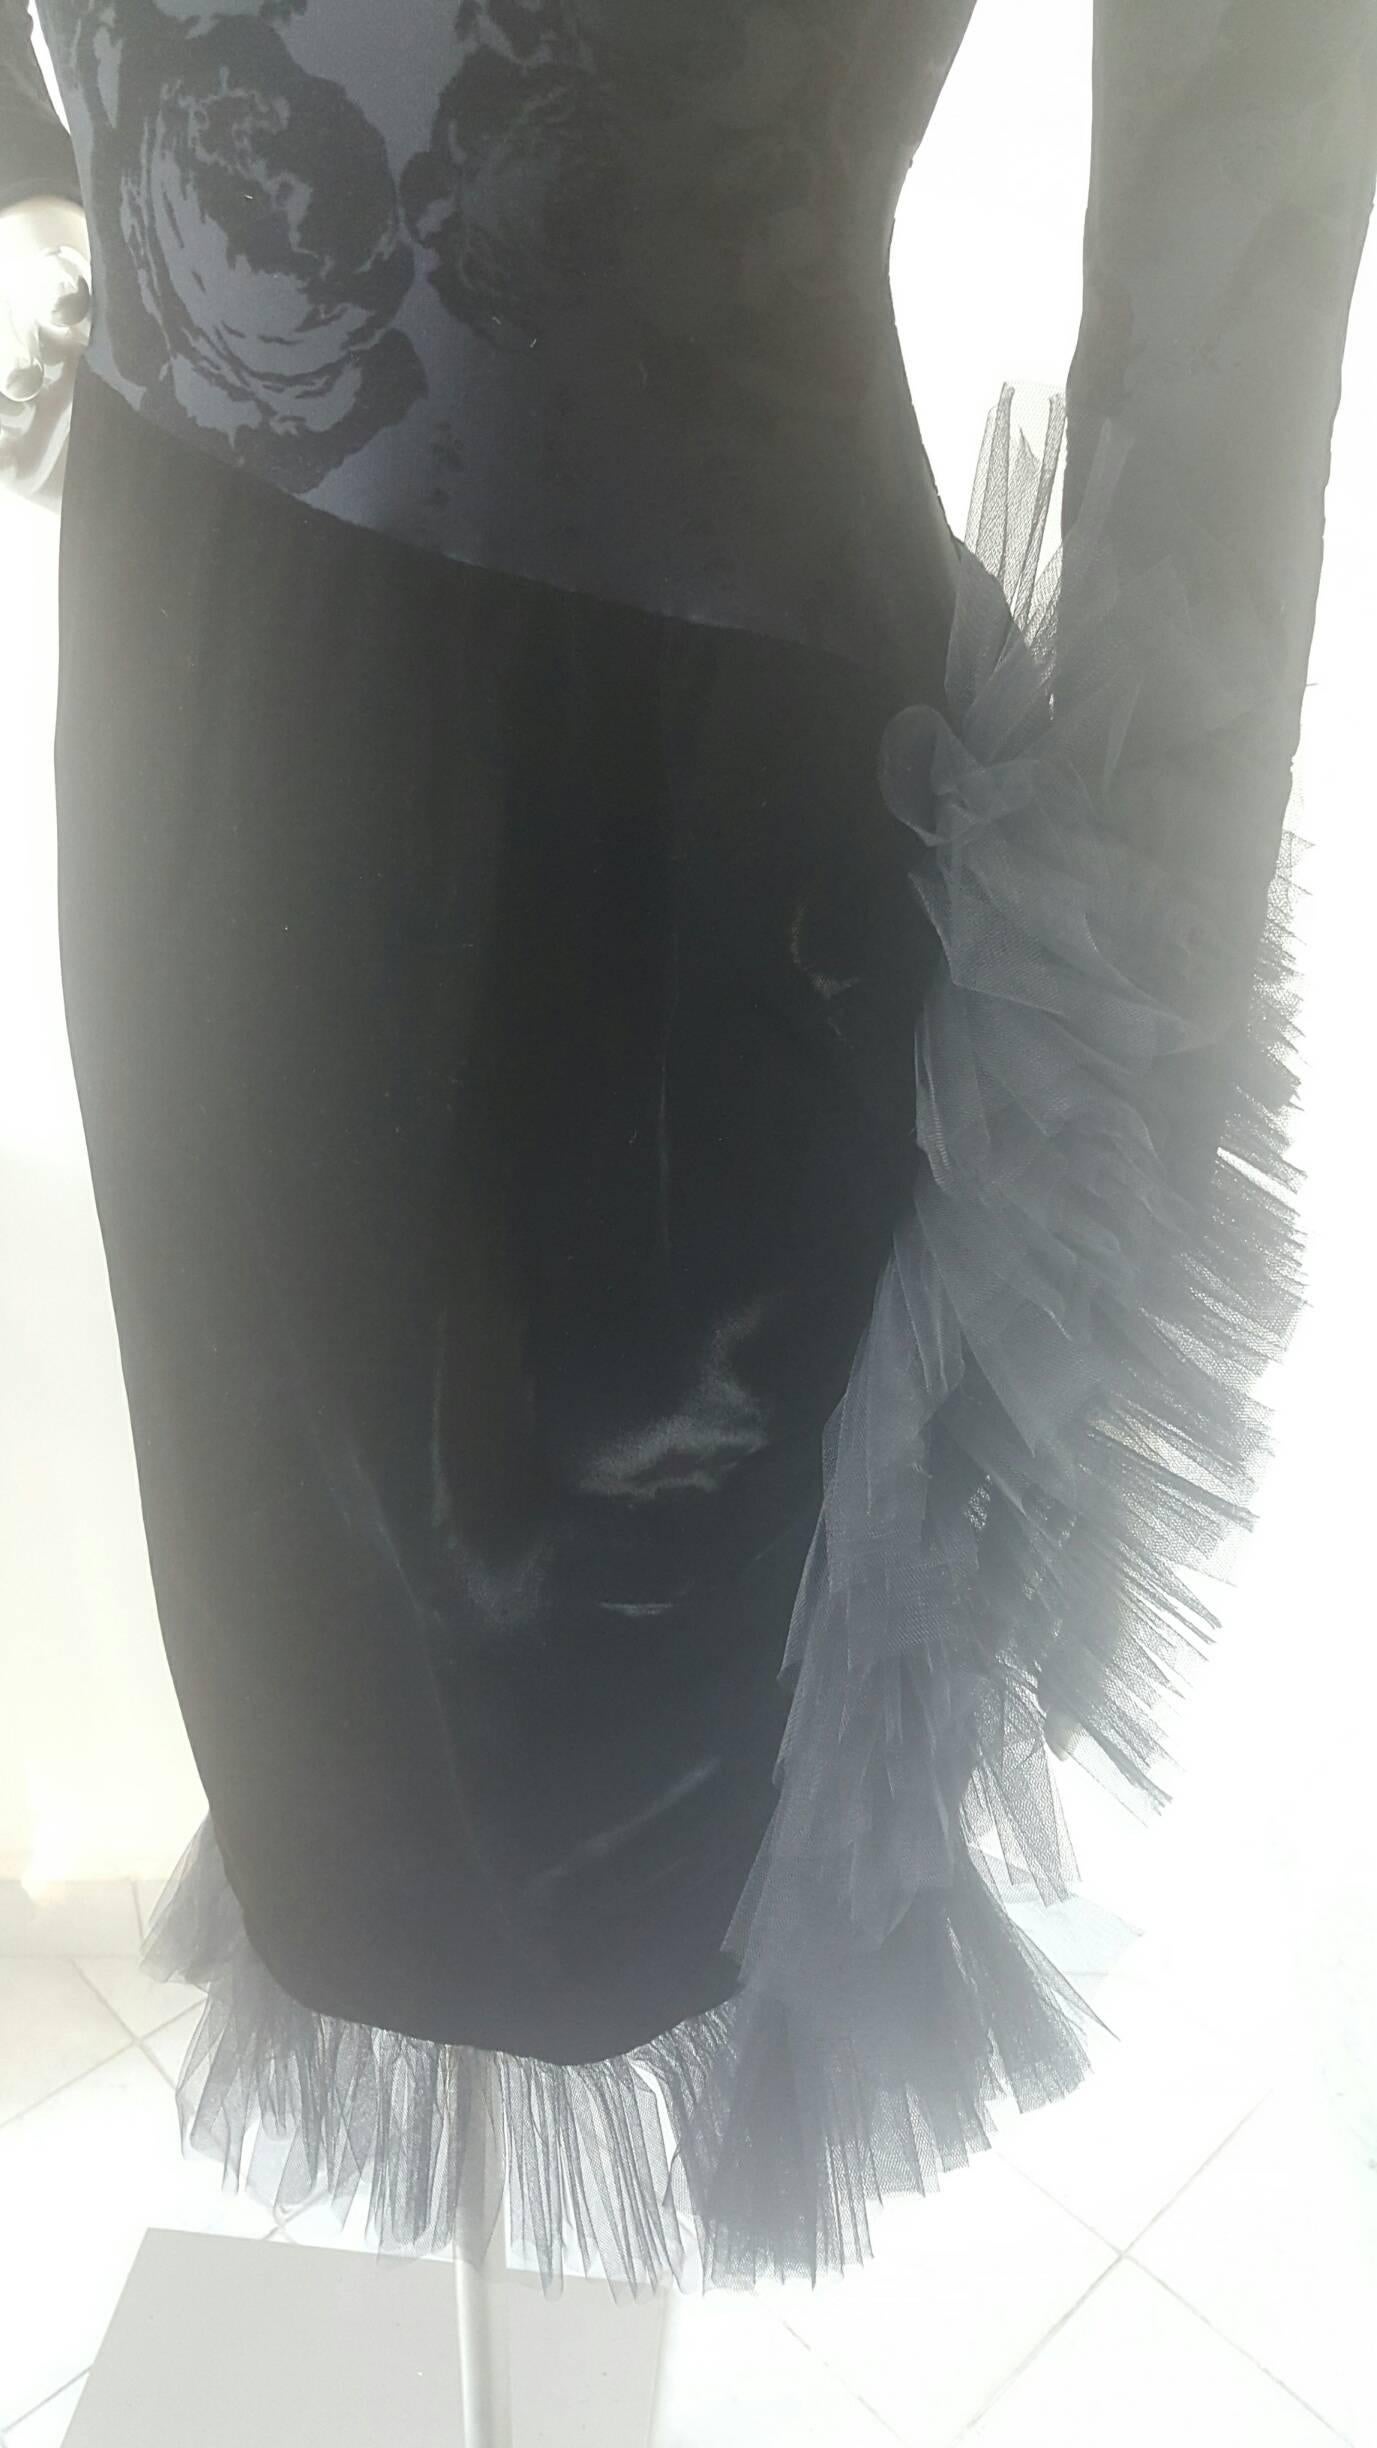 1970s Chiara Boni black dress in italian size range 44
Composition:
1st textile 100% Polyester
2nd textile 80% Nylon 20% Elastane
3rd textile 63% Viscose 37% CUpro silk